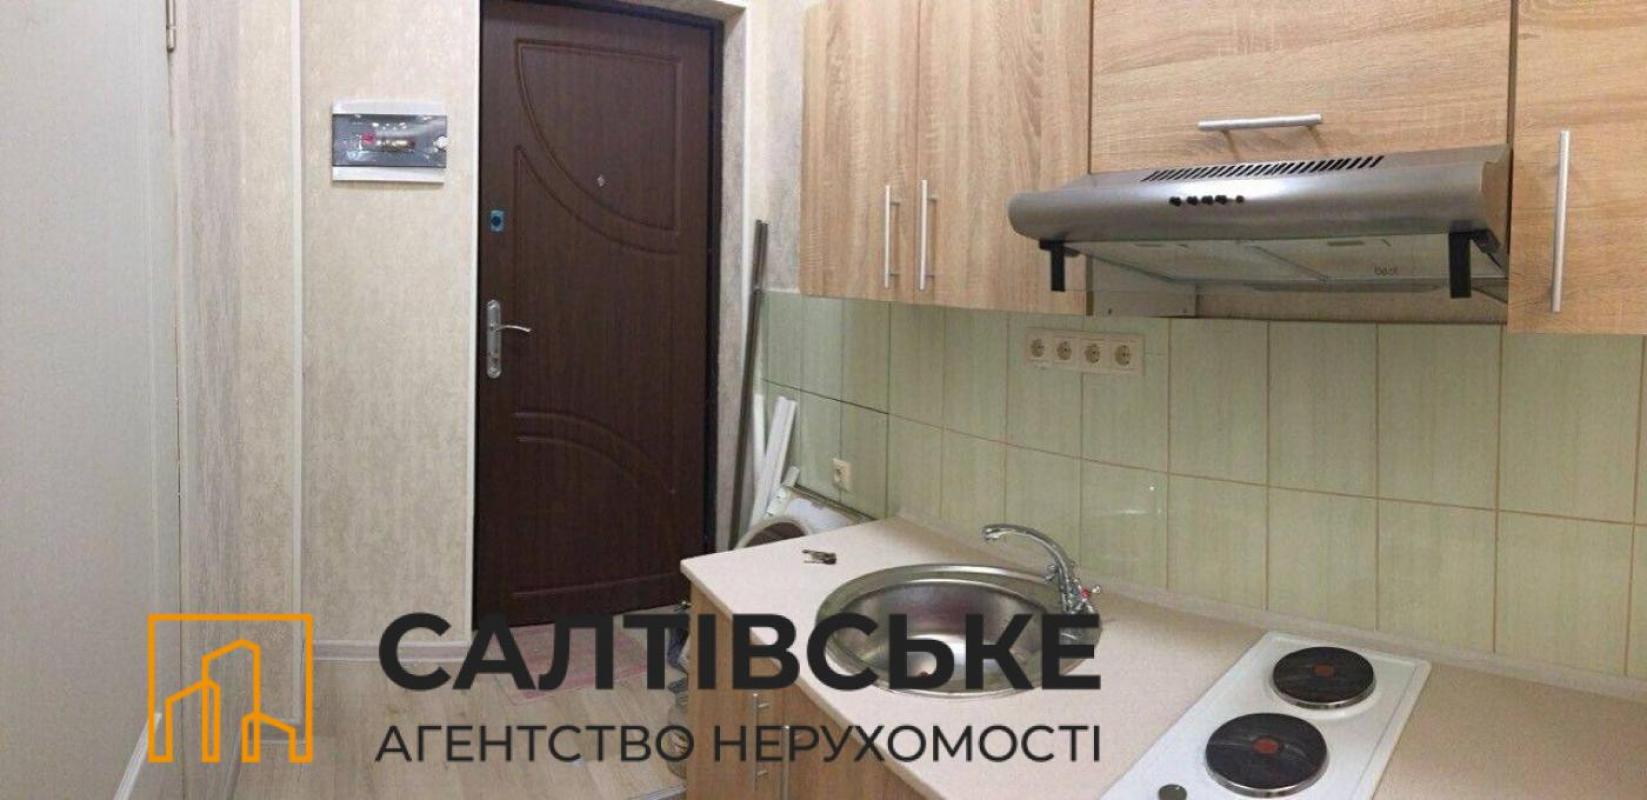 Sale 1 bedroom-(s) apartment 20 sq. m., Ivana Kamysheva Street 6